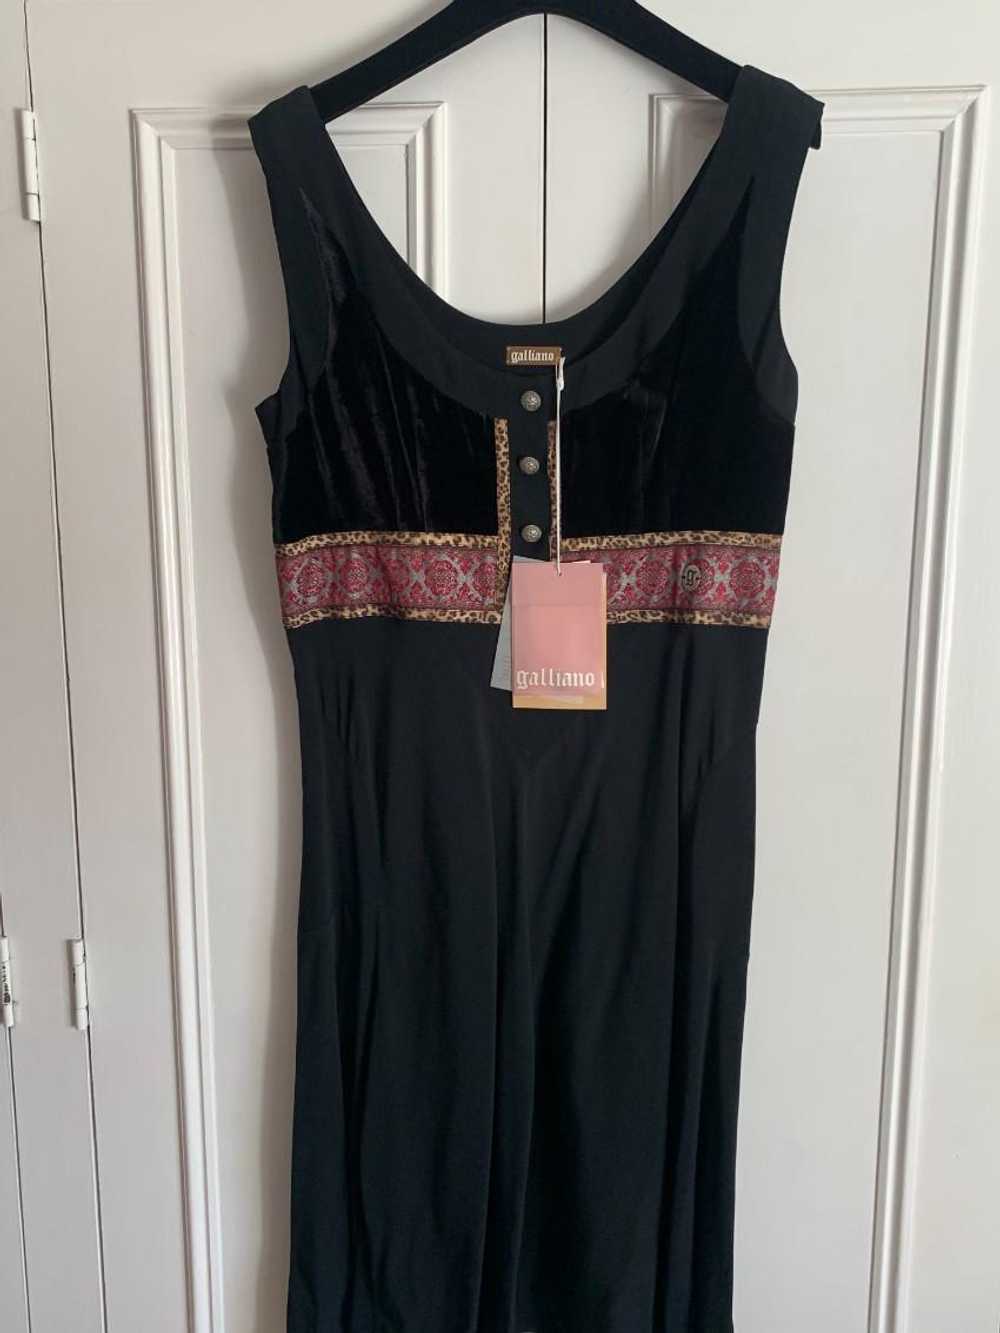 Galliano Galliano Black Satin Embroidered Dress - image 3